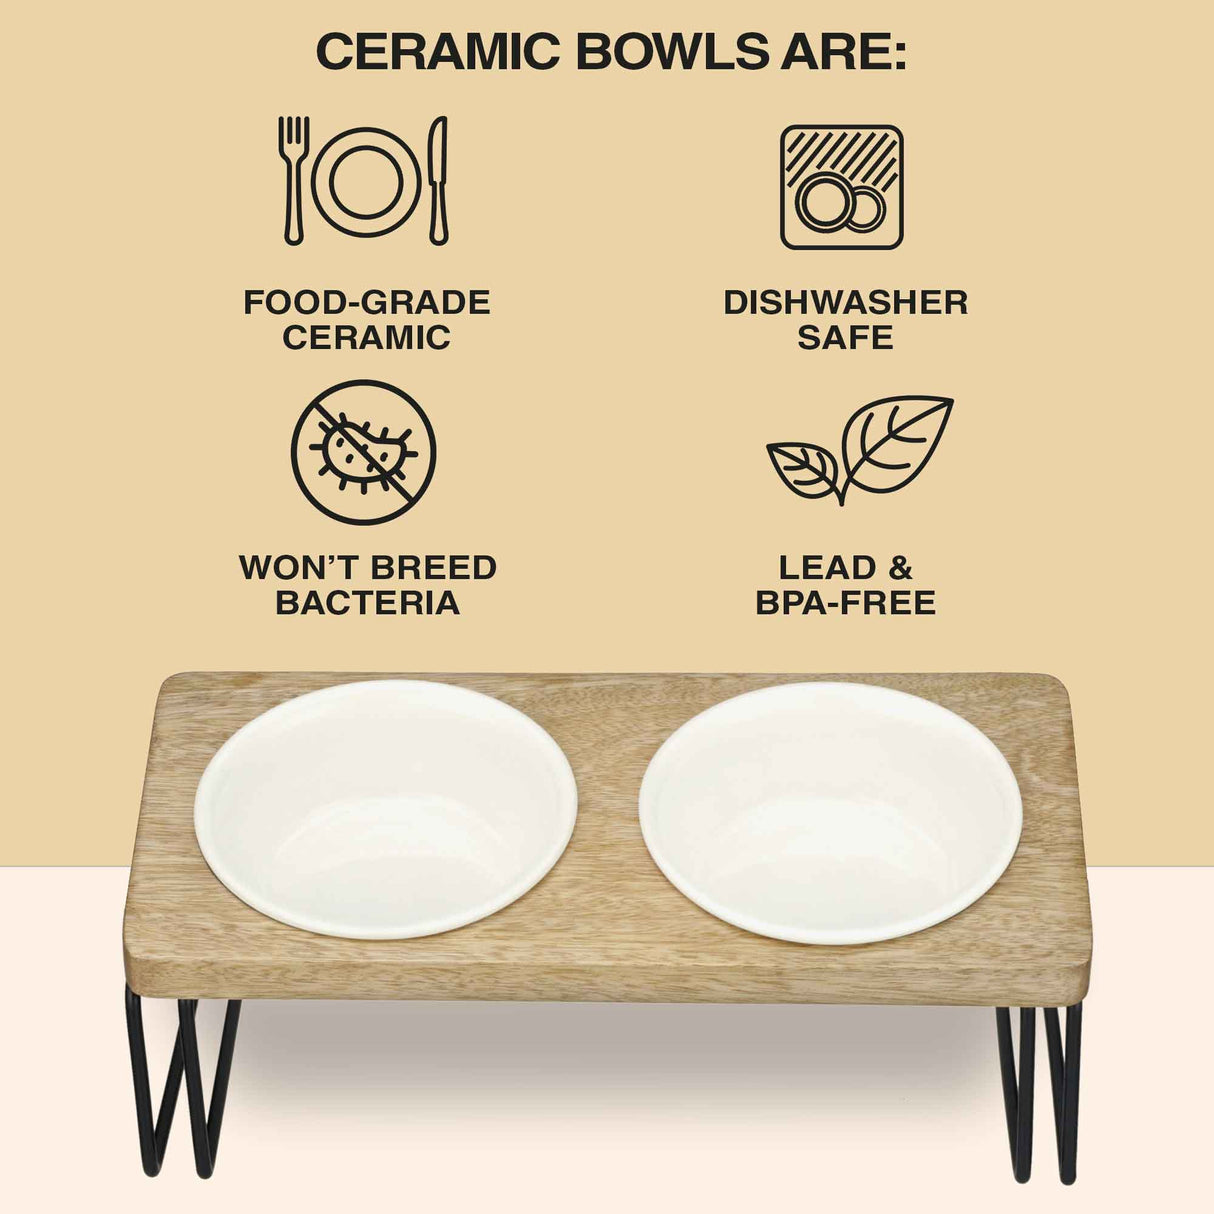 Image explaining benefits of using ceramic bowls - food grade, dishwasher safe, won't breed bacteria, and BPA and lead free